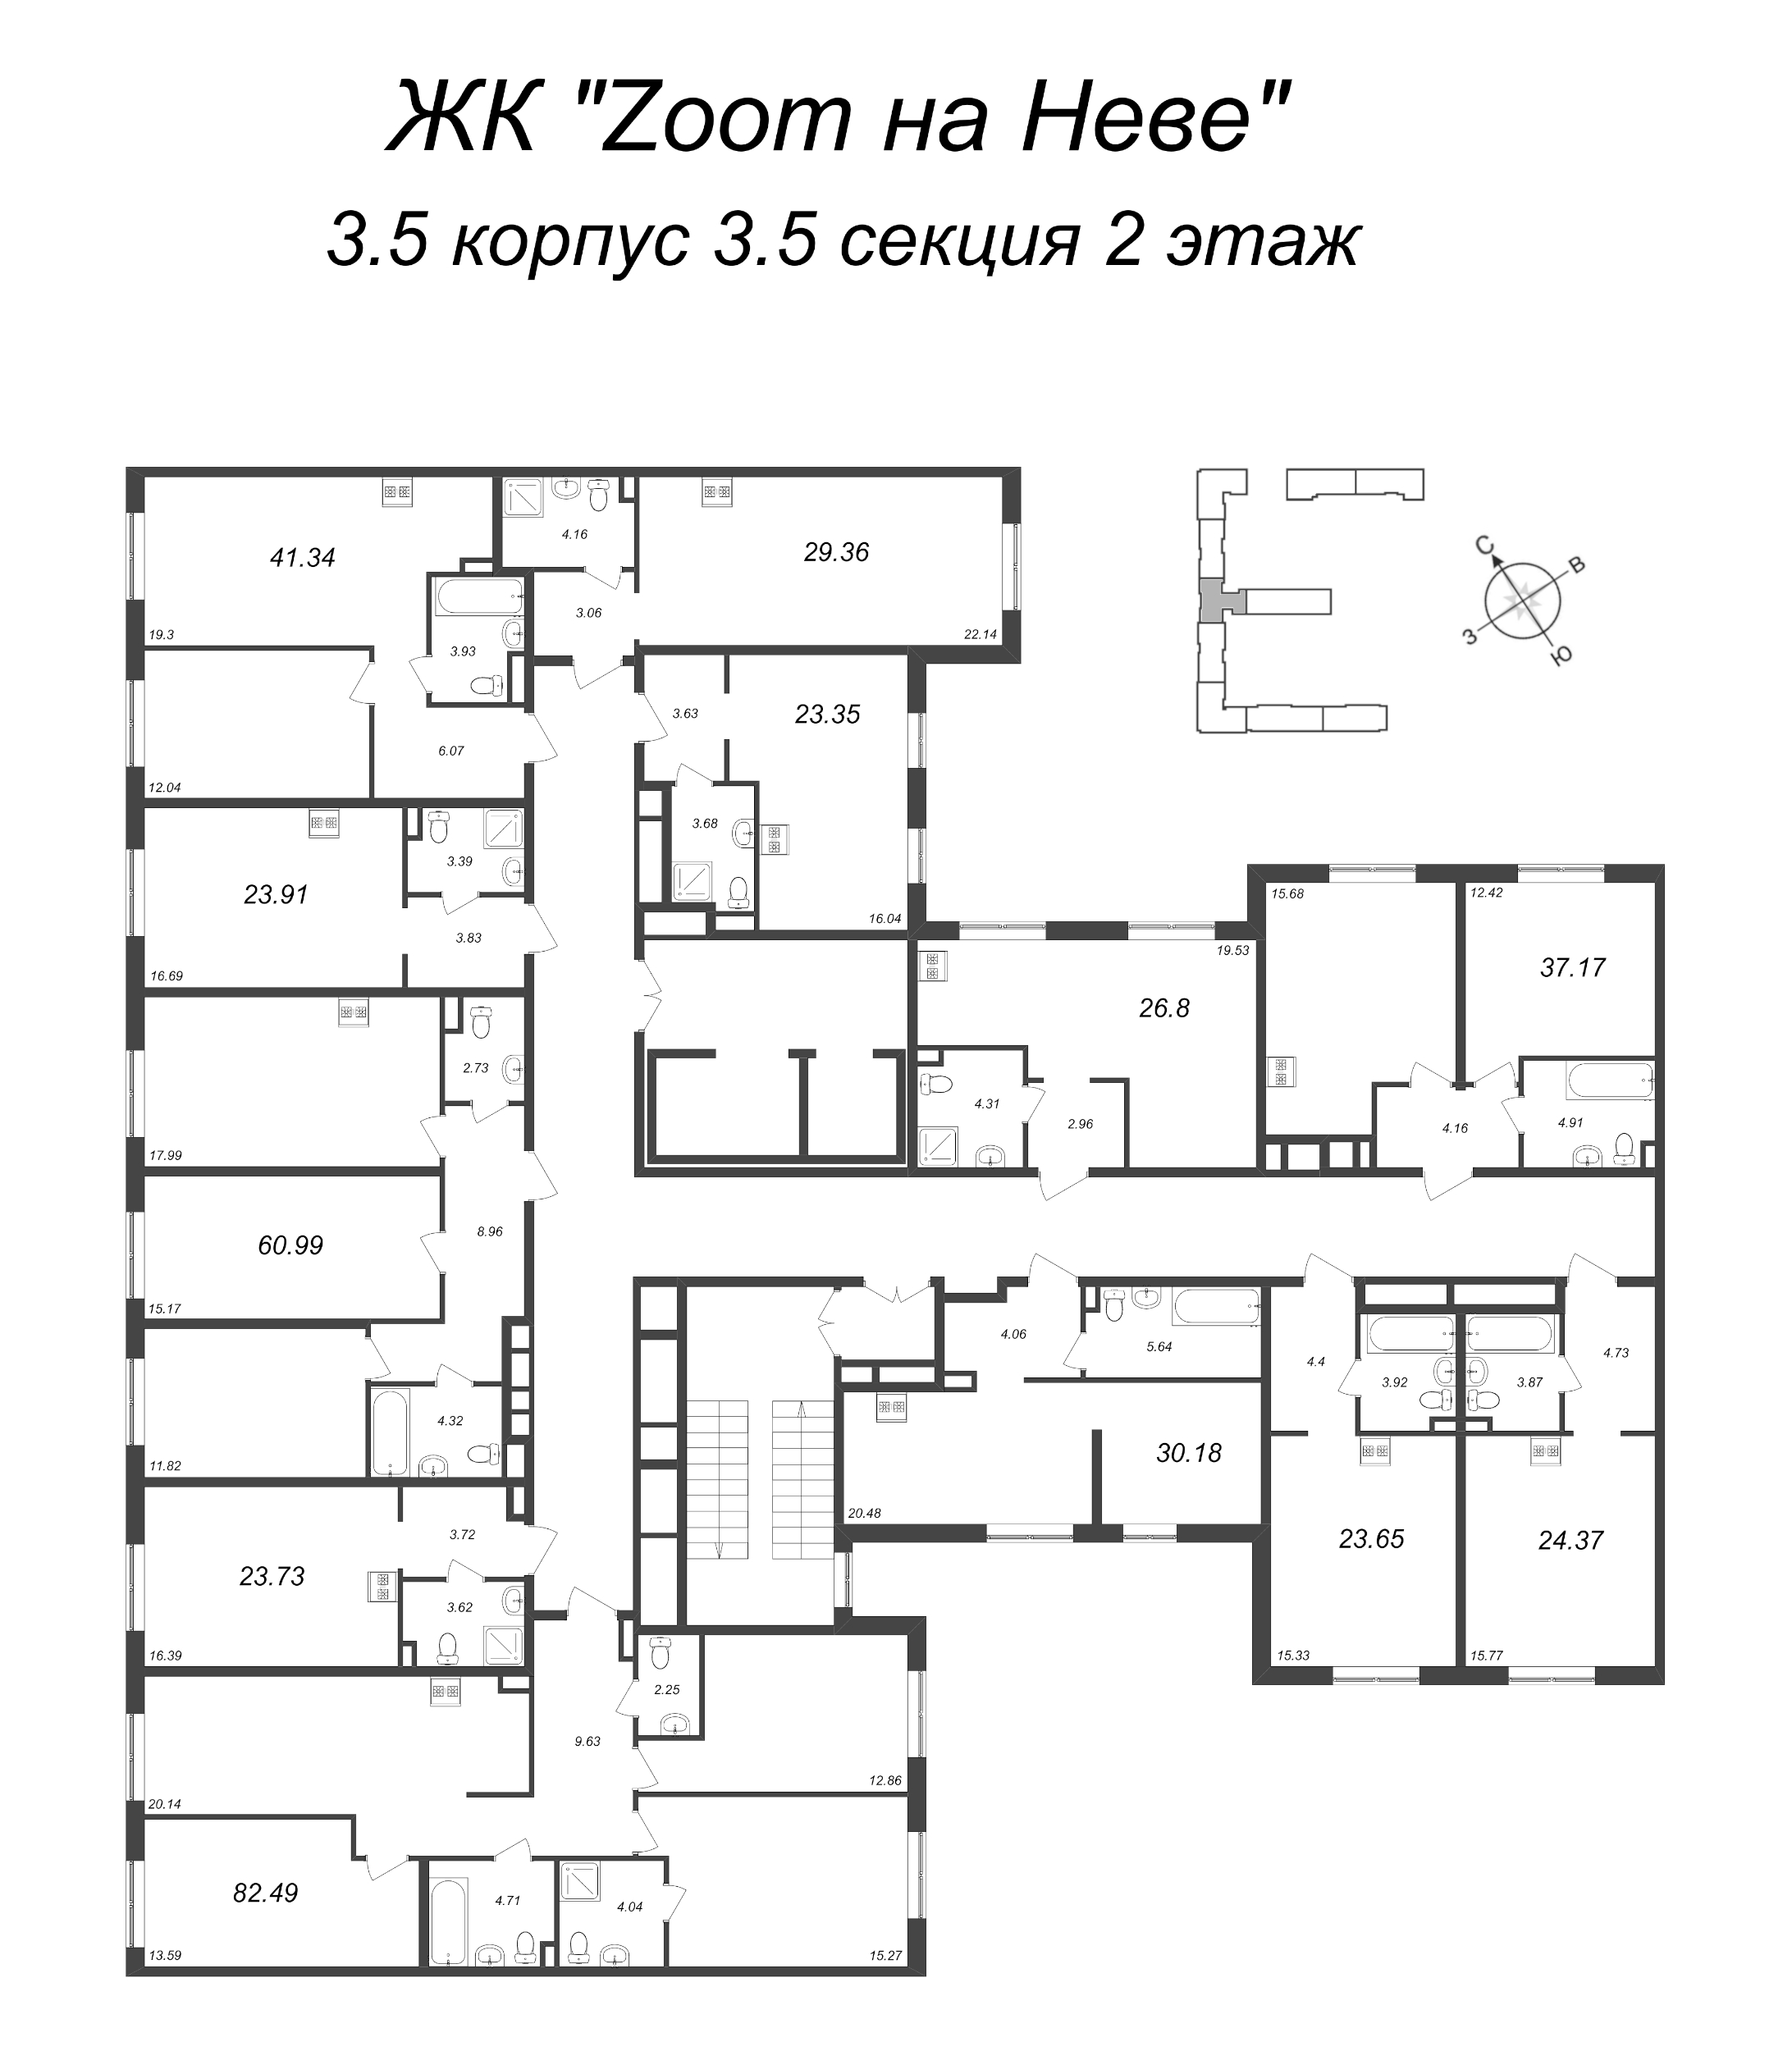 4-комнатная (Евро) квартира, 82.49 м² - планировка этажа